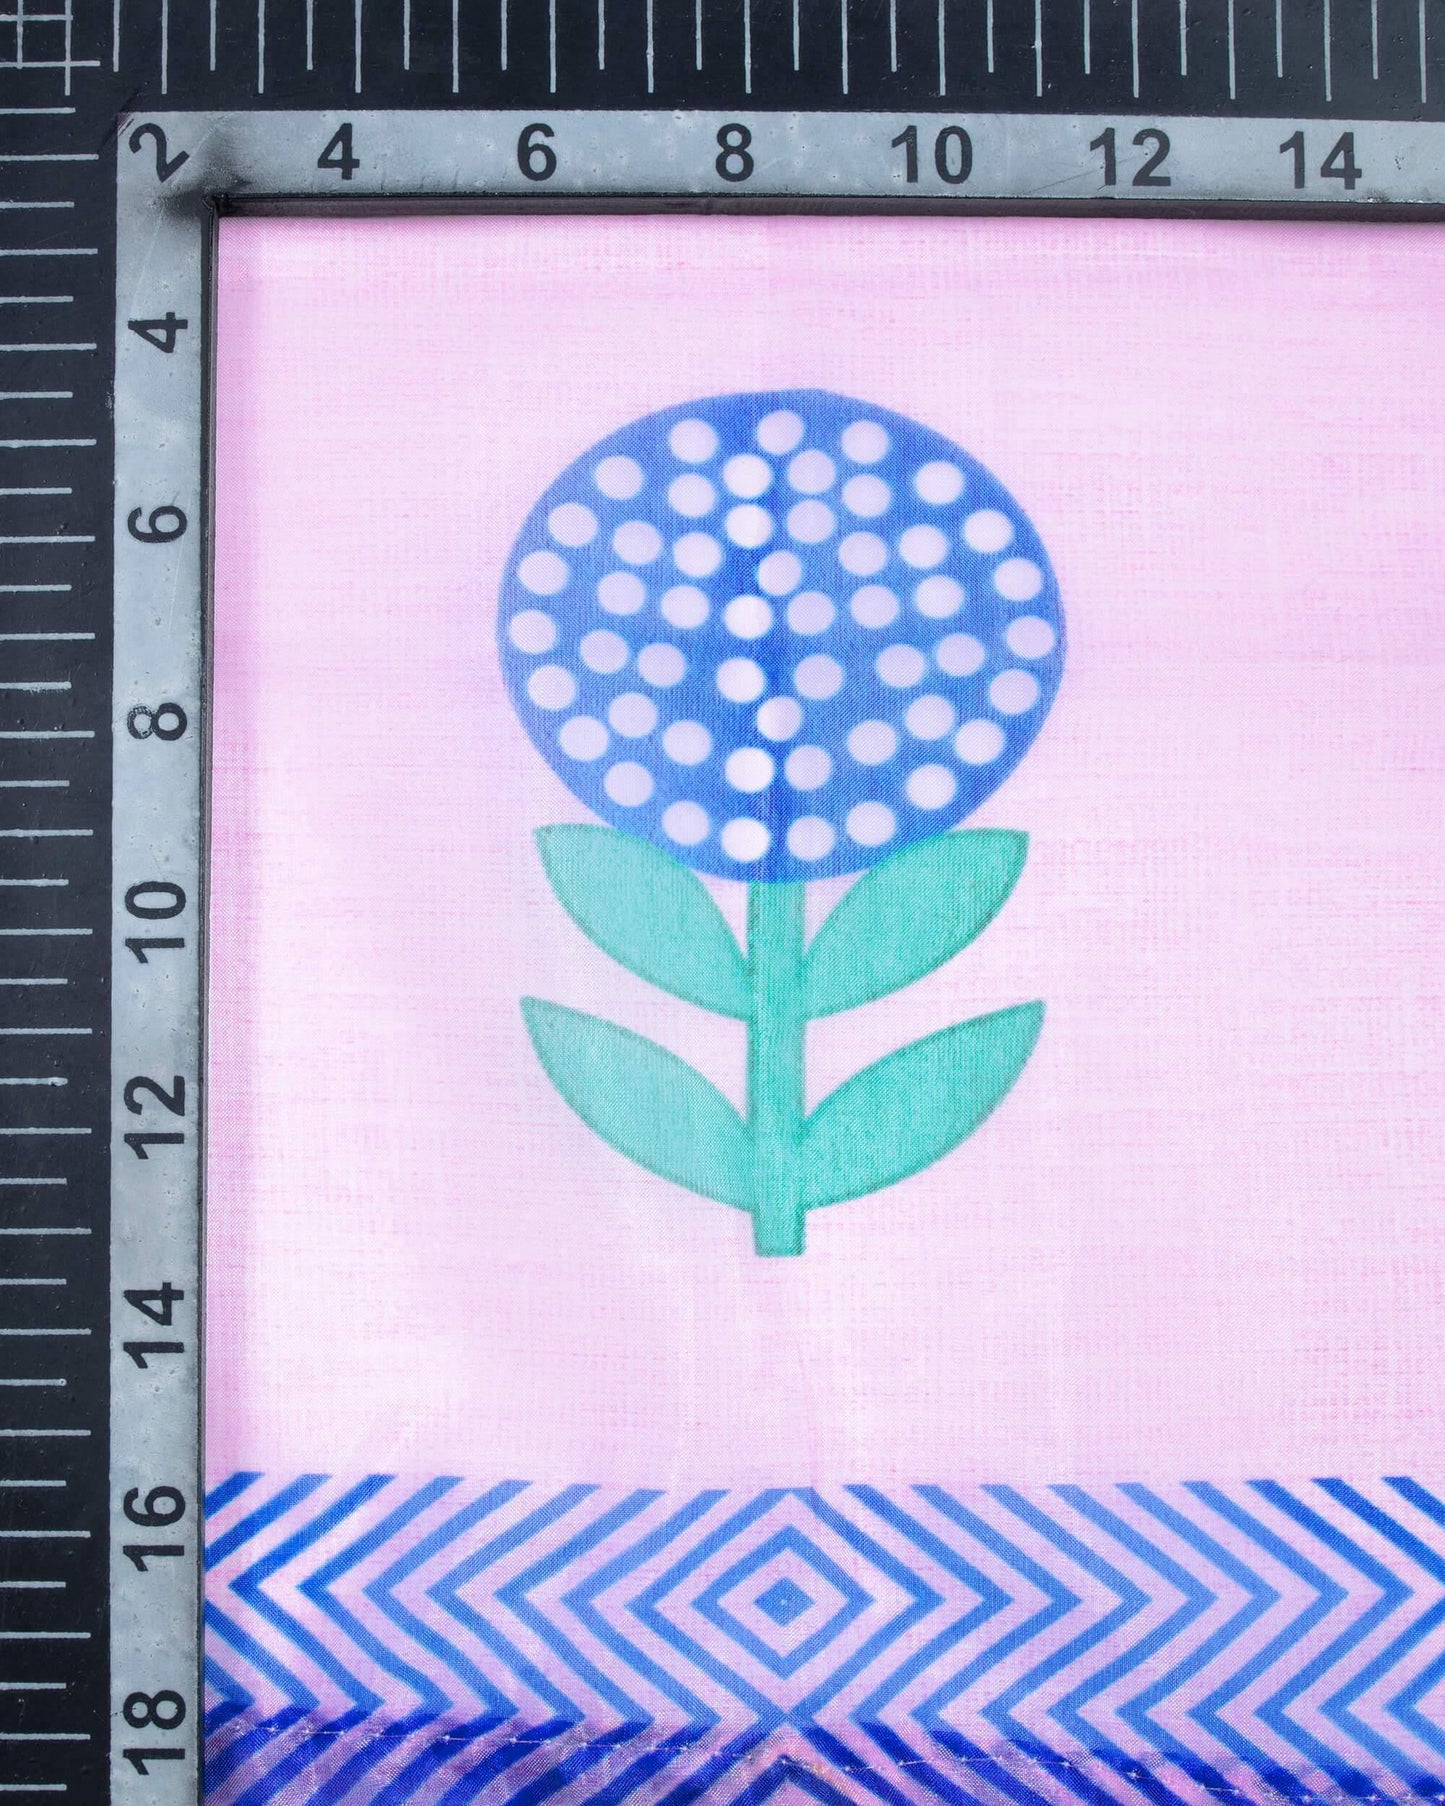 Taffy Pink And Royal Blue Floral Pattern Digital Print Premium Organza Dupatta With Tassels - Fabcurate